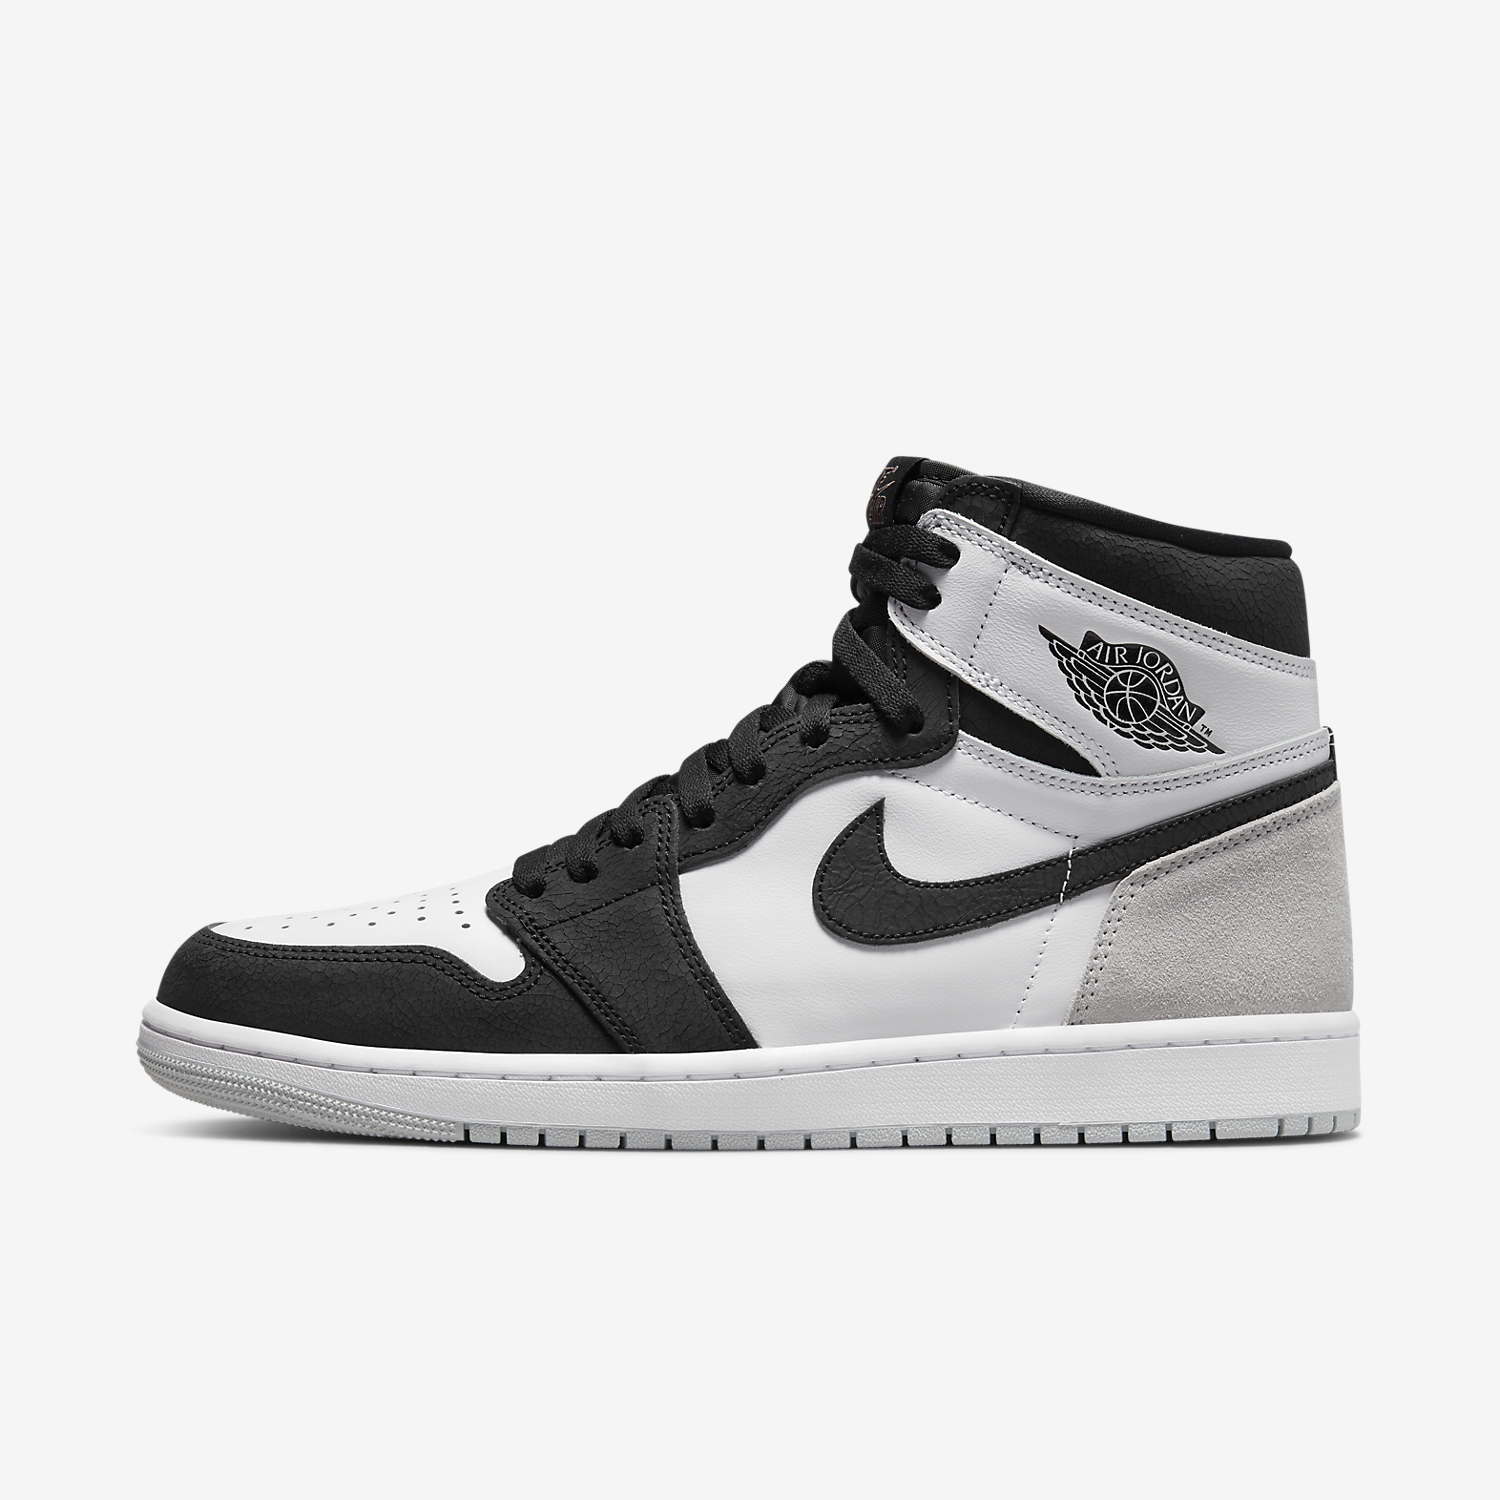 Sneaker Drop — Air Jordan 1 Retro High OG 'Stage Haze'